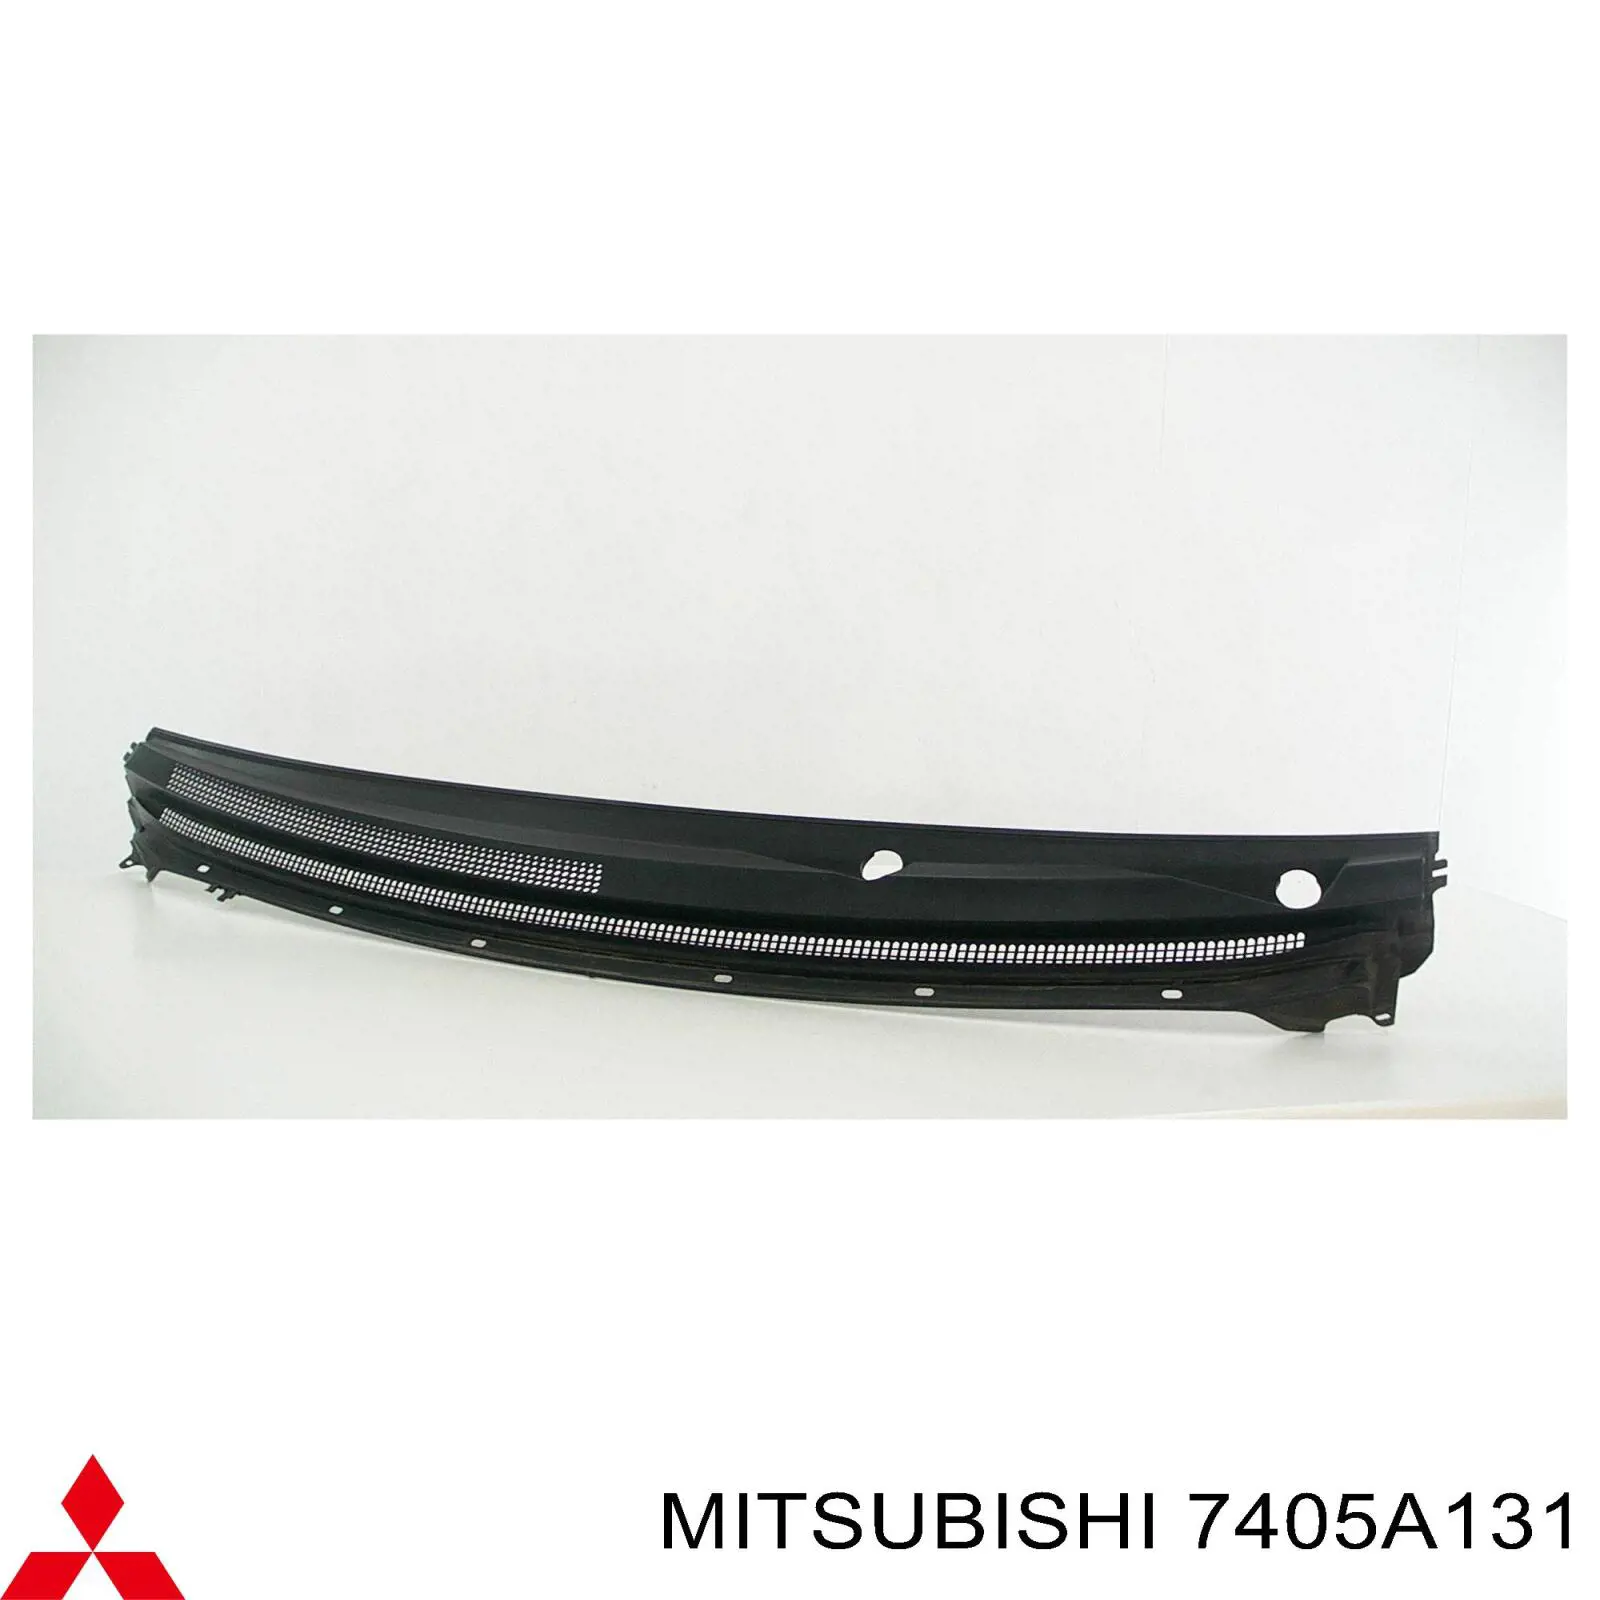 7405A131 Mitsubishi rejilla de limpiaparabrisas